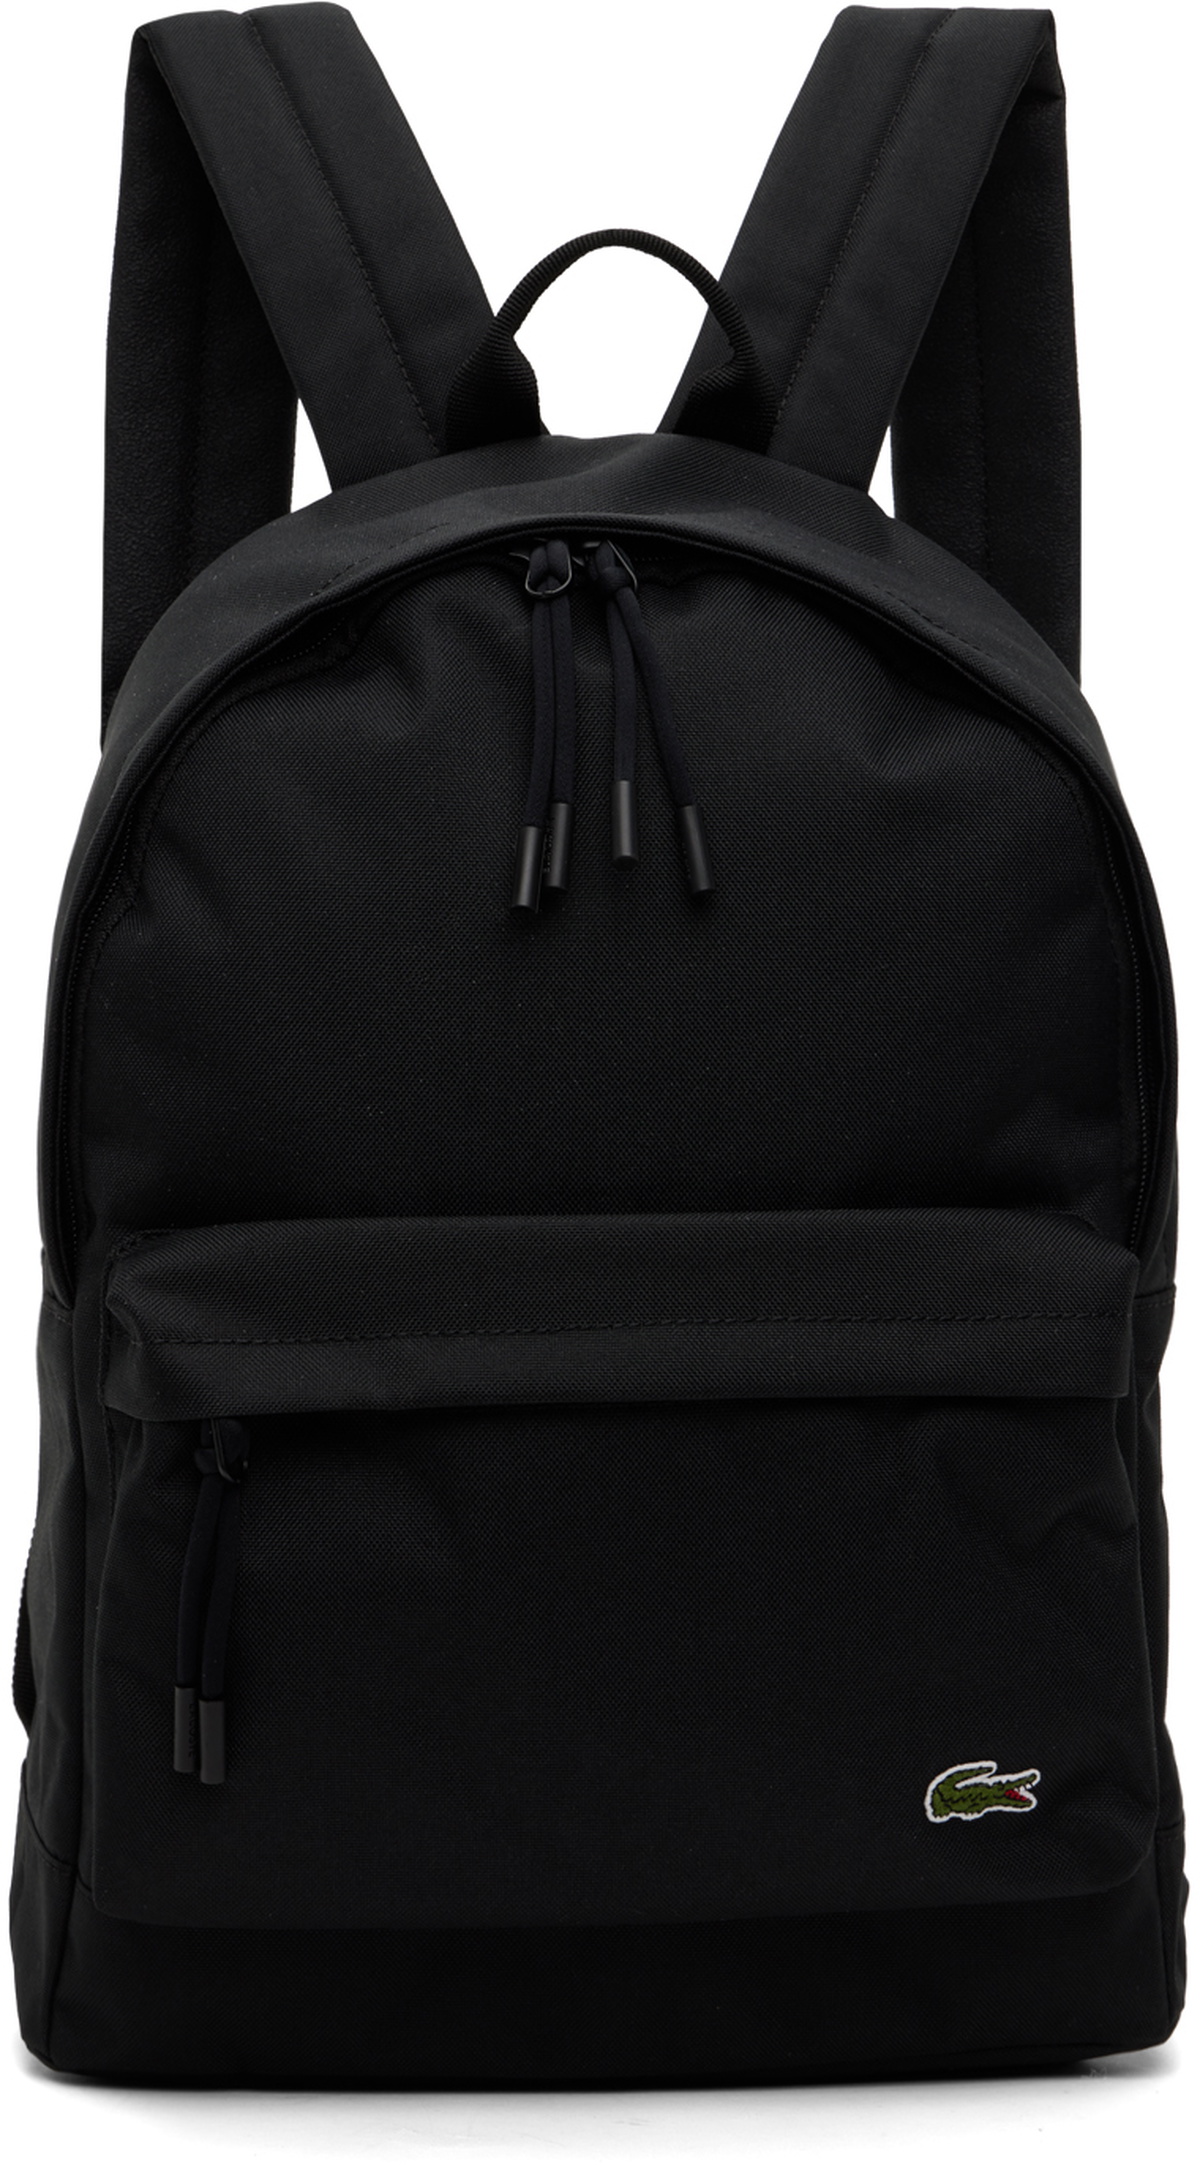 Lacoste Black Zip Backpack Lacoste